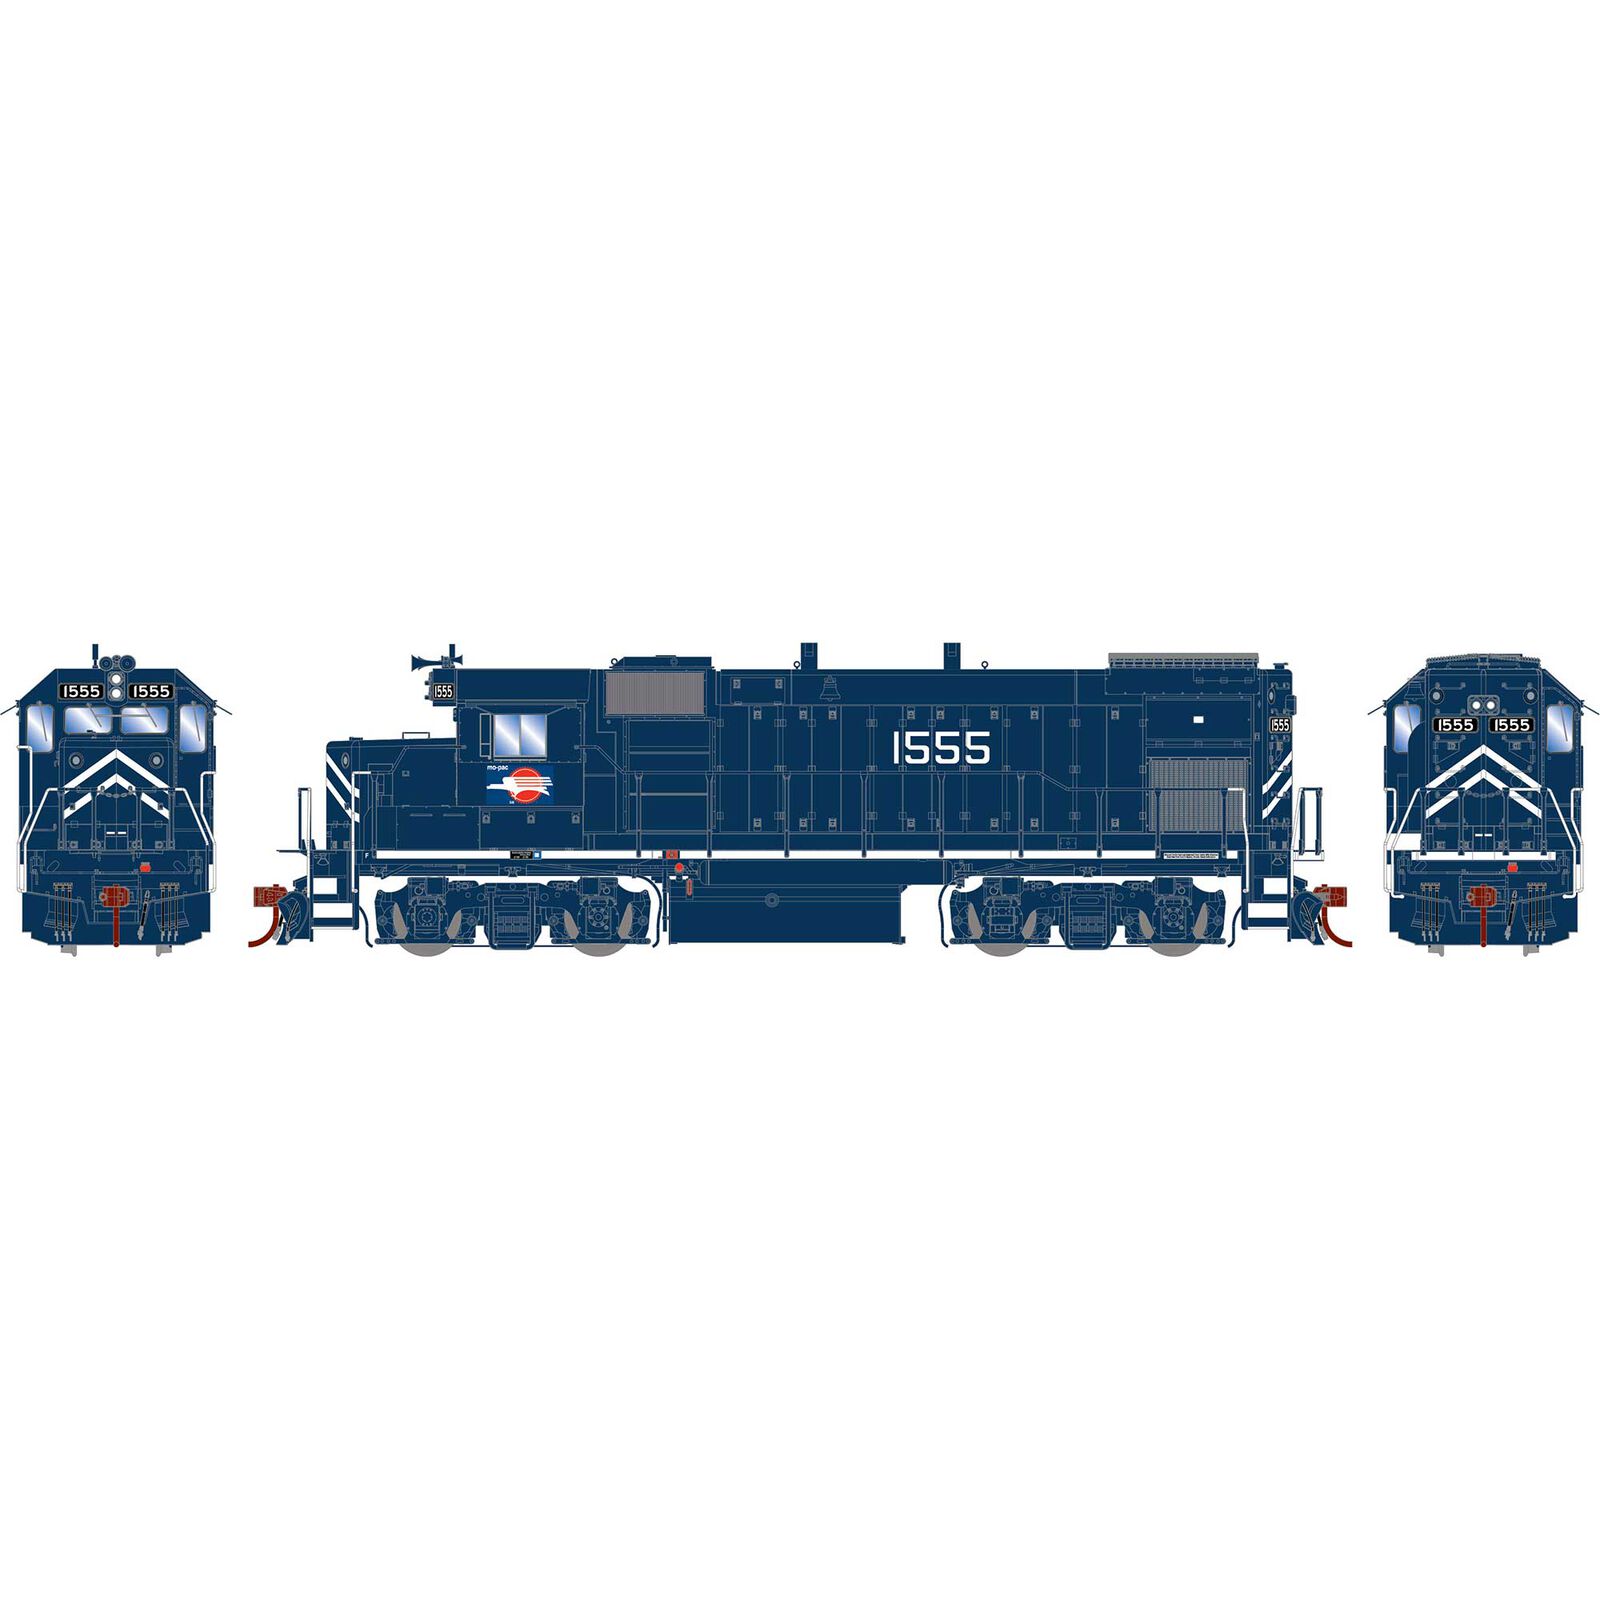 HO GP15-1 Locomotive with DCC & Sound, Missouri Pacific #1555